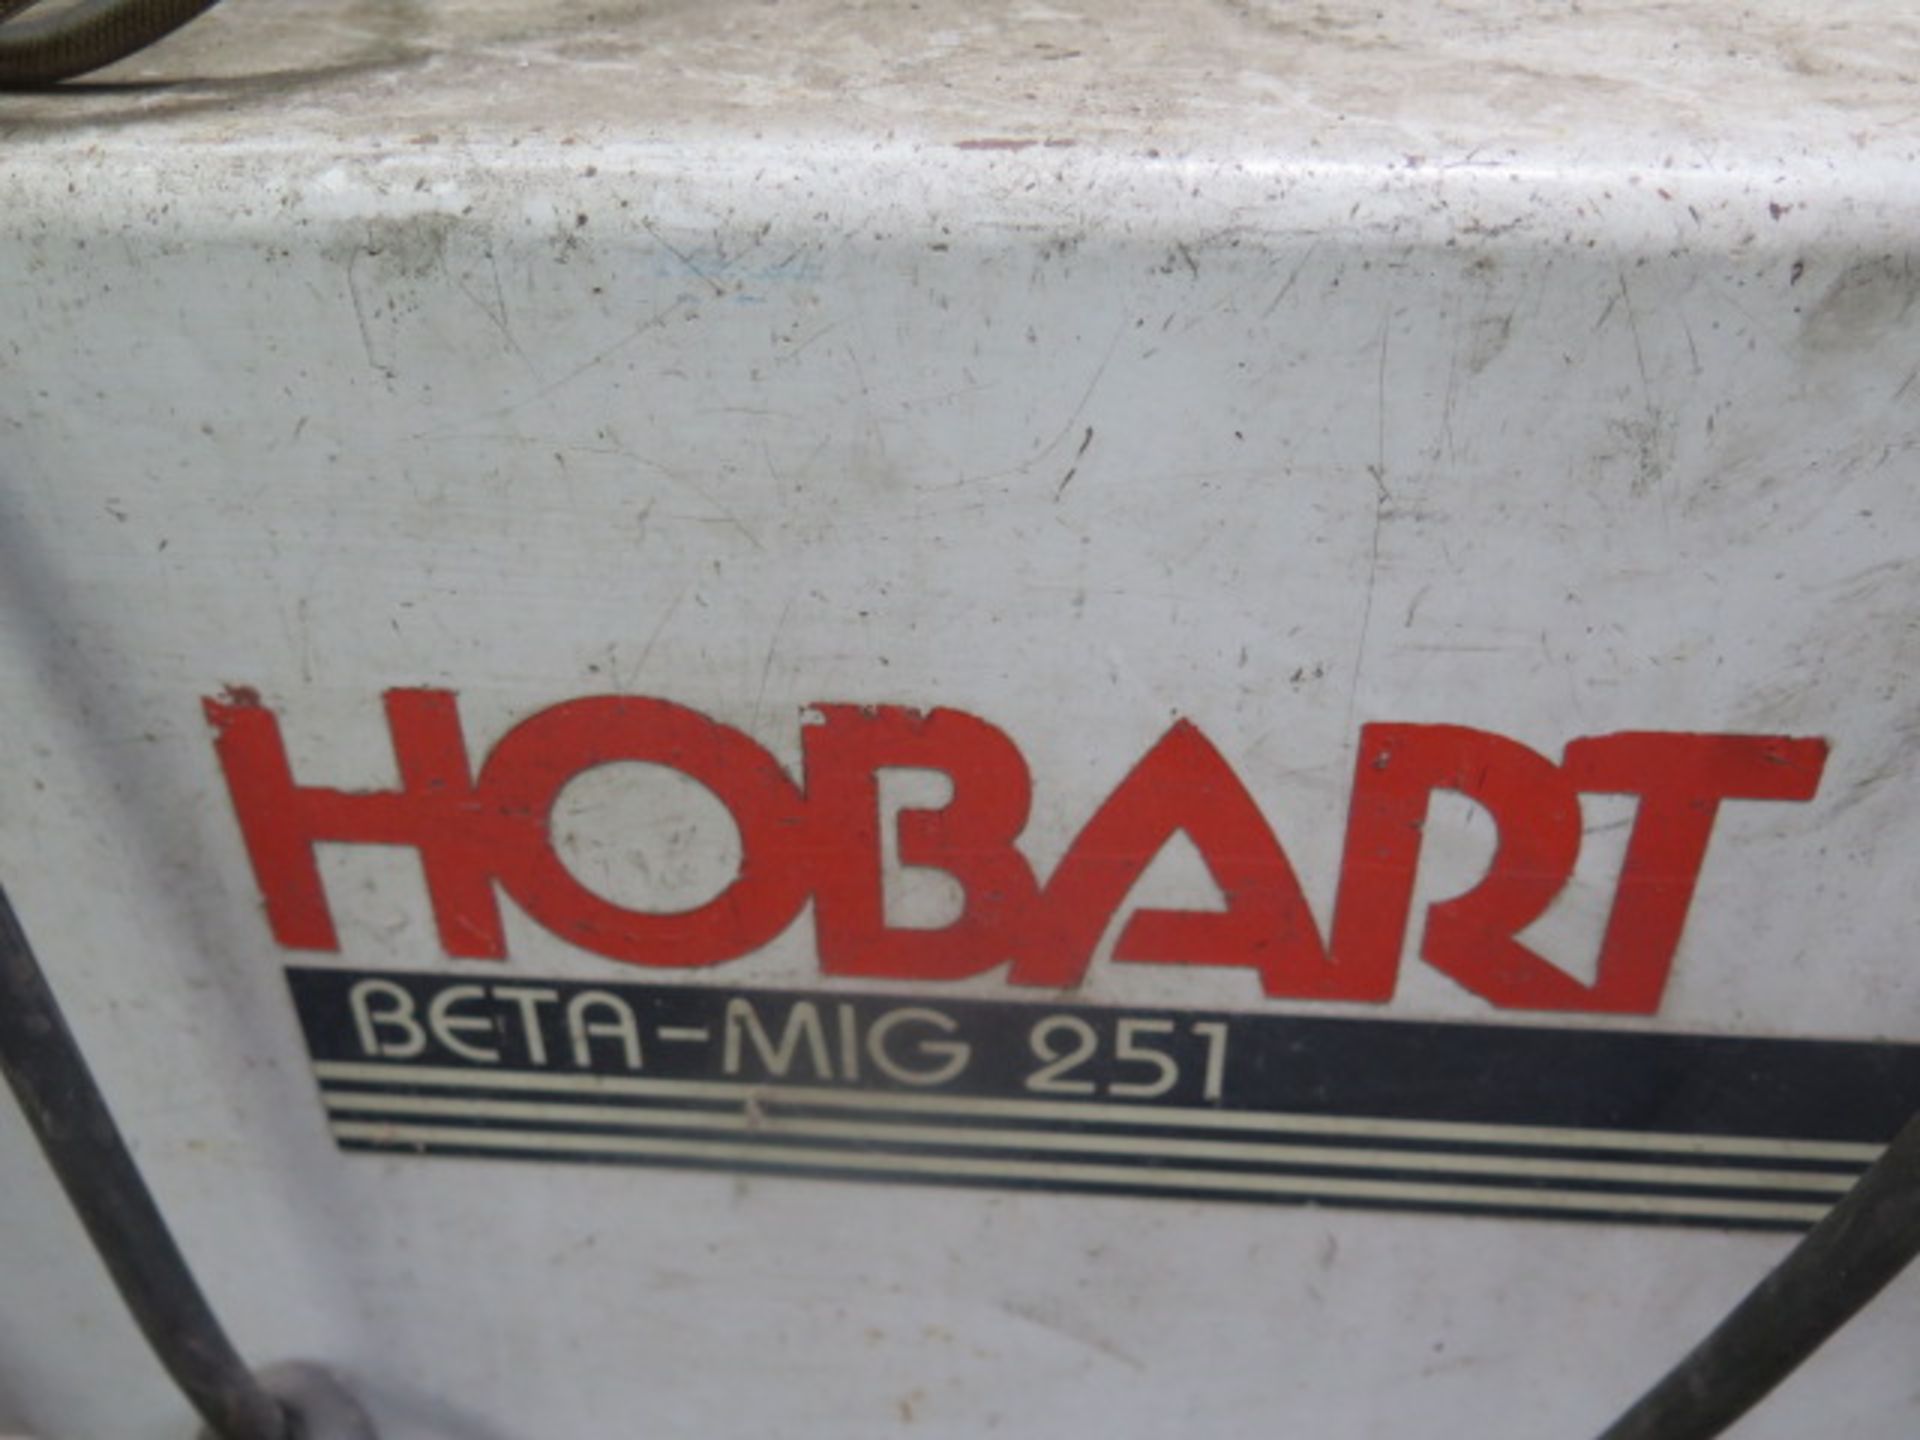 Hobart Beta-MIG 250 Welding Power Source (SOLD AS-IS - NO WARRANTY) - Image 7 of 7